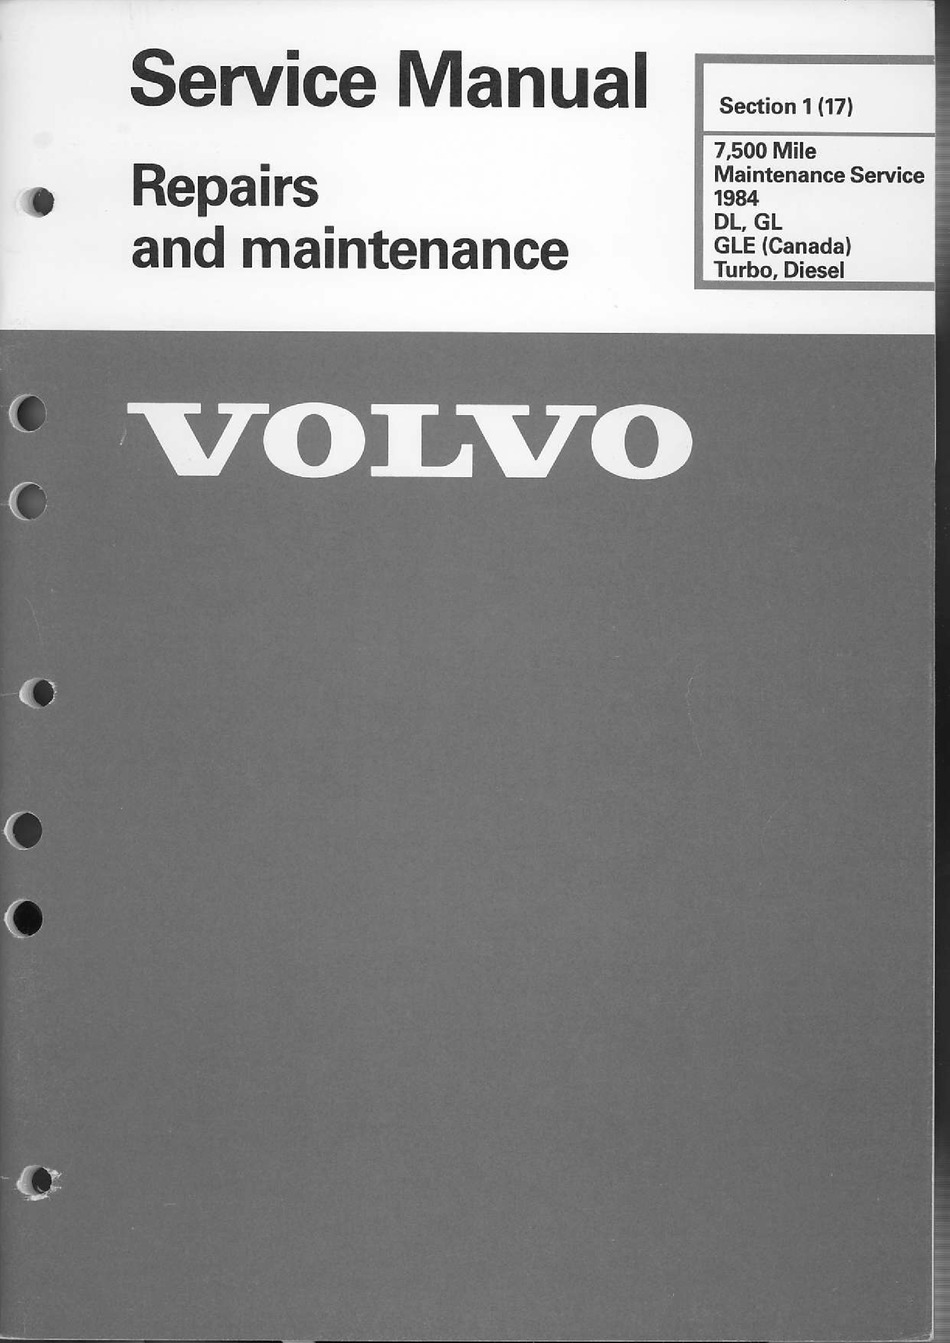 VOLVO 240 1984 SERVICE MANUAL Pdf Download | ManualsLib